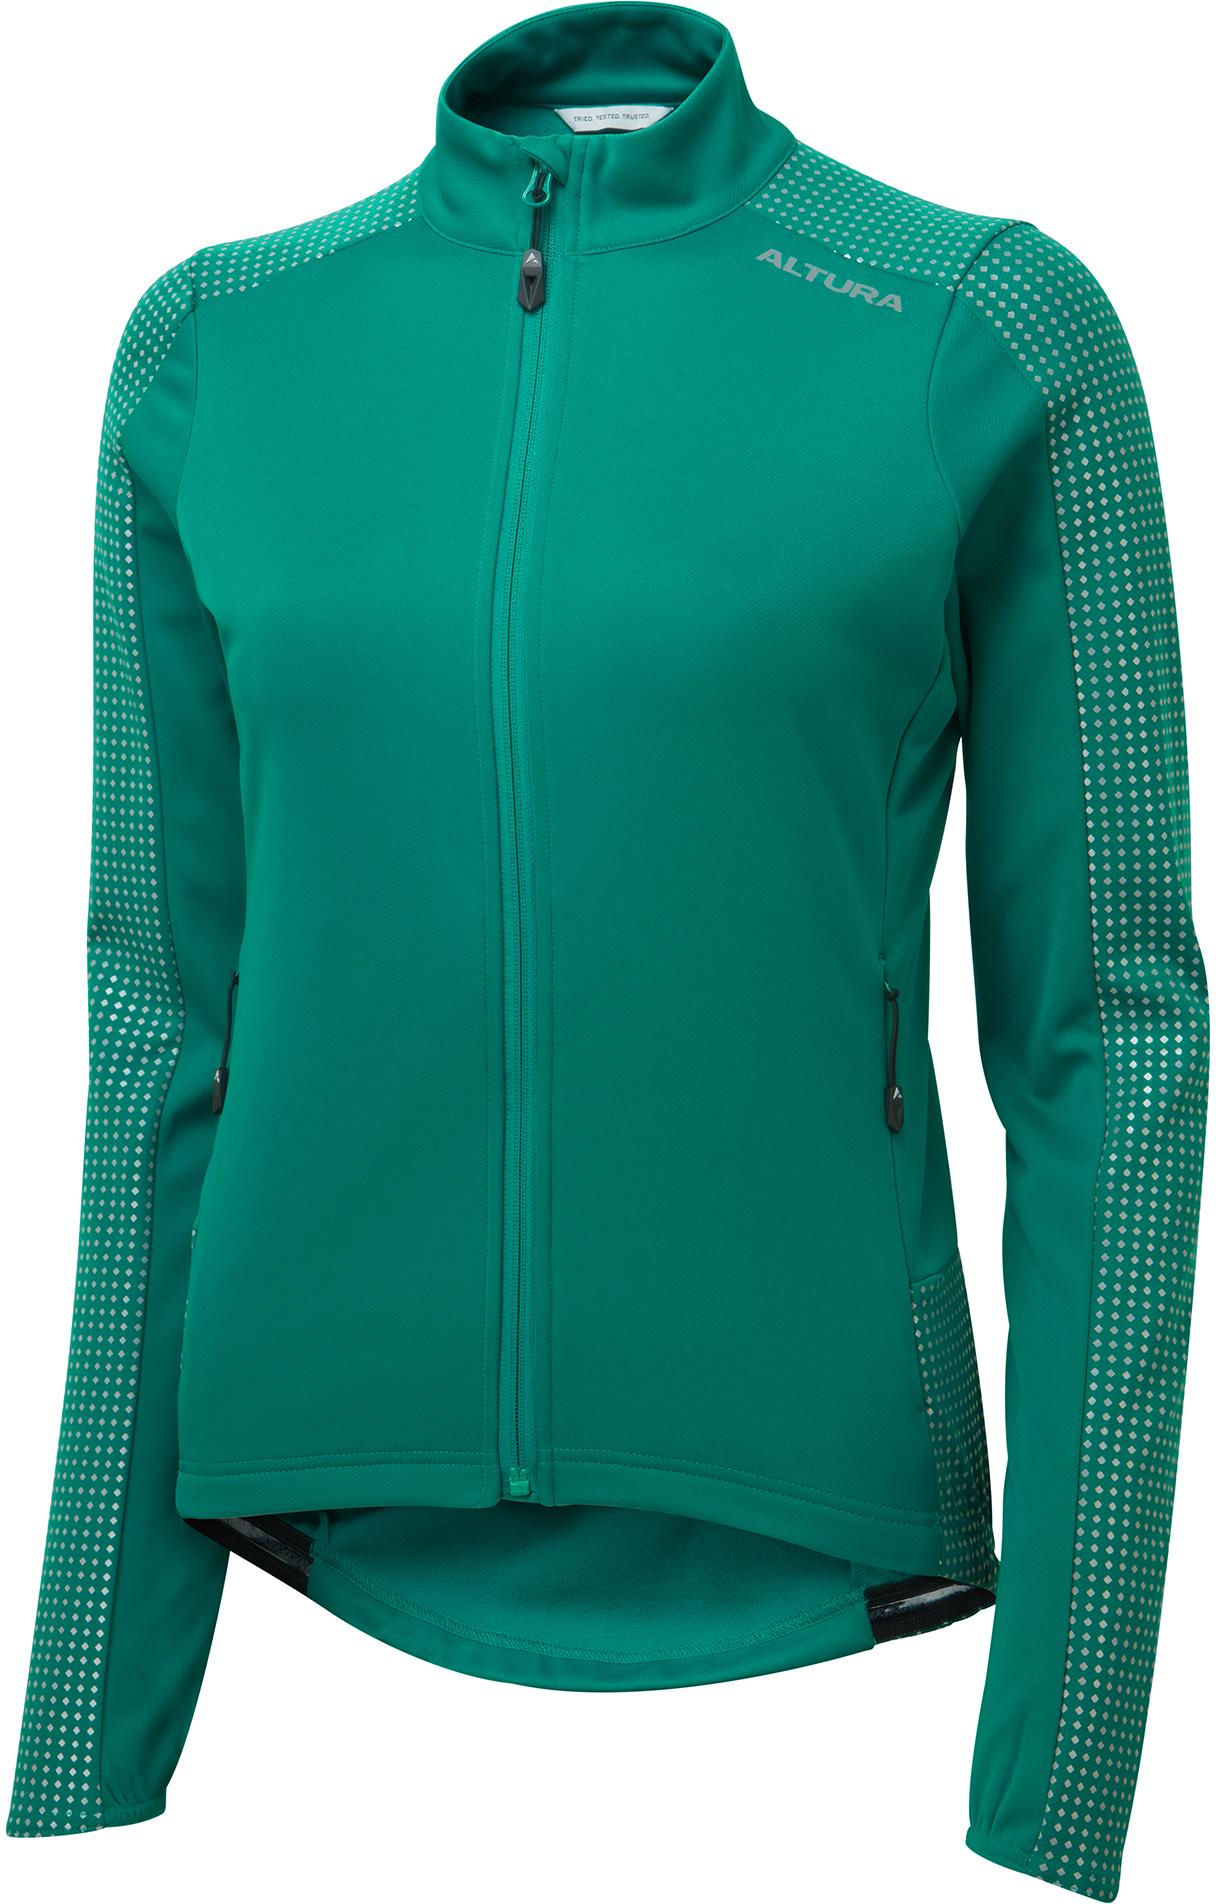 Altura Nightvision Women's Long Sleeve Jersey Green 14